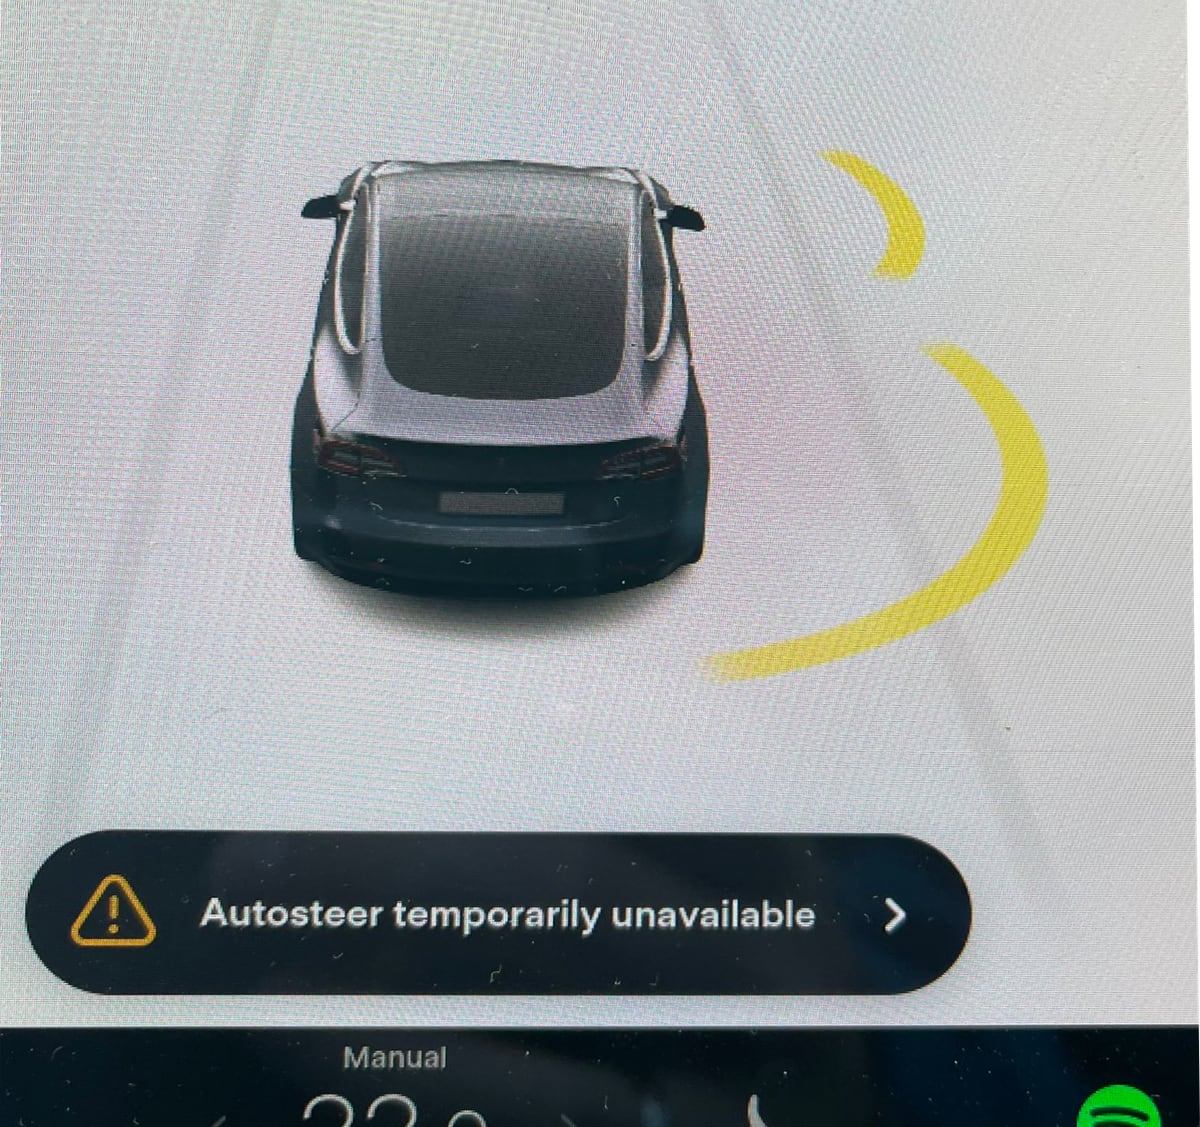 Tesla Vehicle Alerts feature in update 2022.28.2